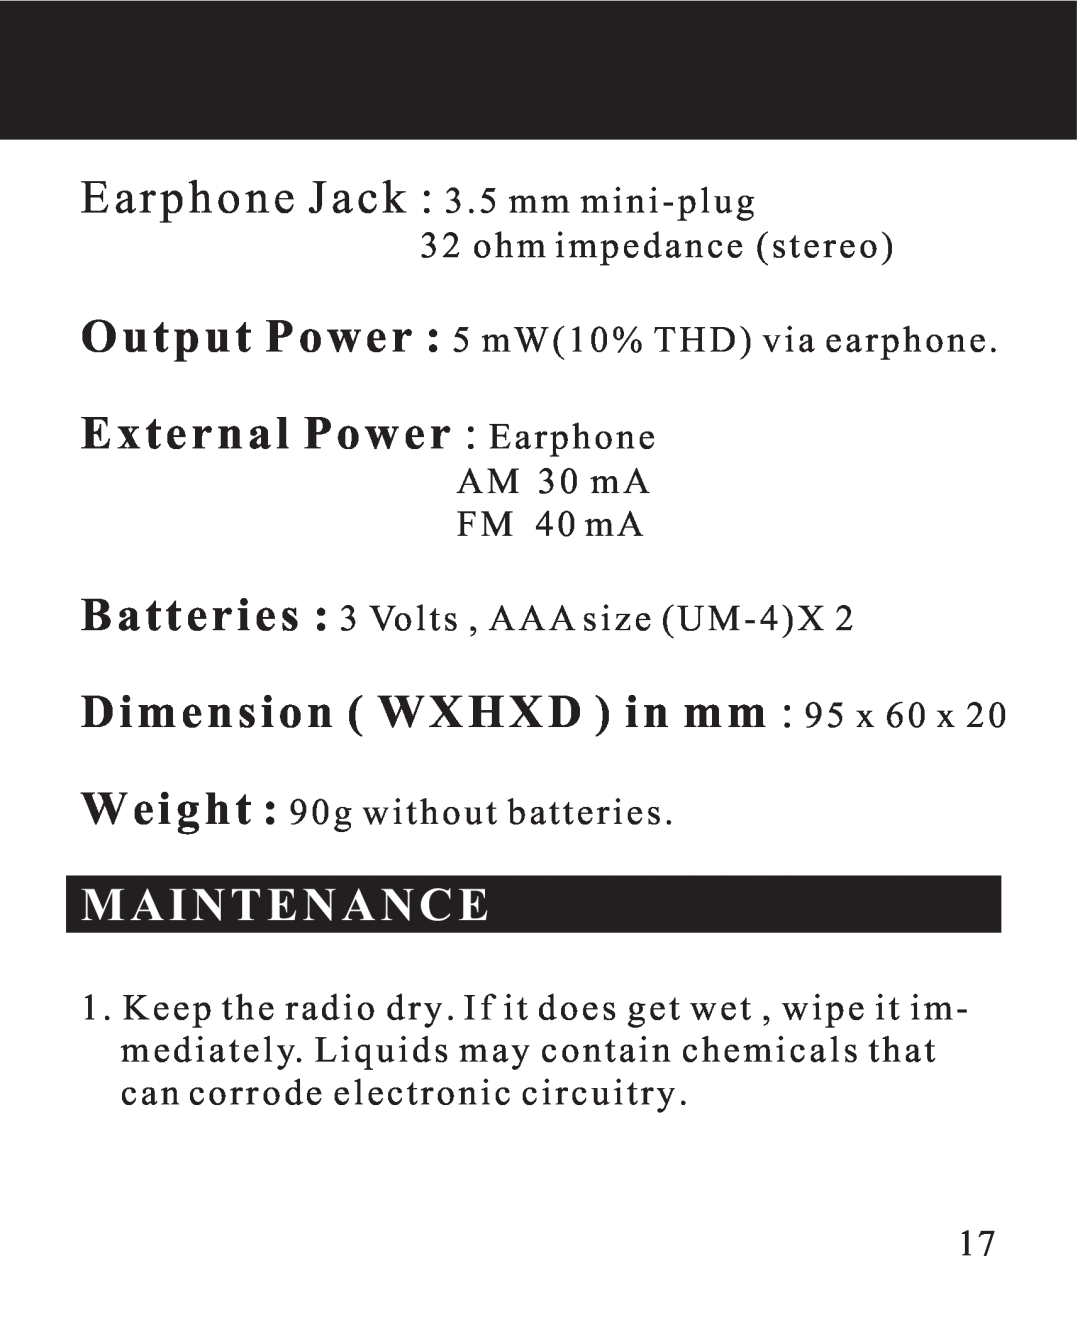 Sangean Electronics DT-110 manual External Power Earphone, Dimension WXHXD in mm 95 x 60, Maintenance 